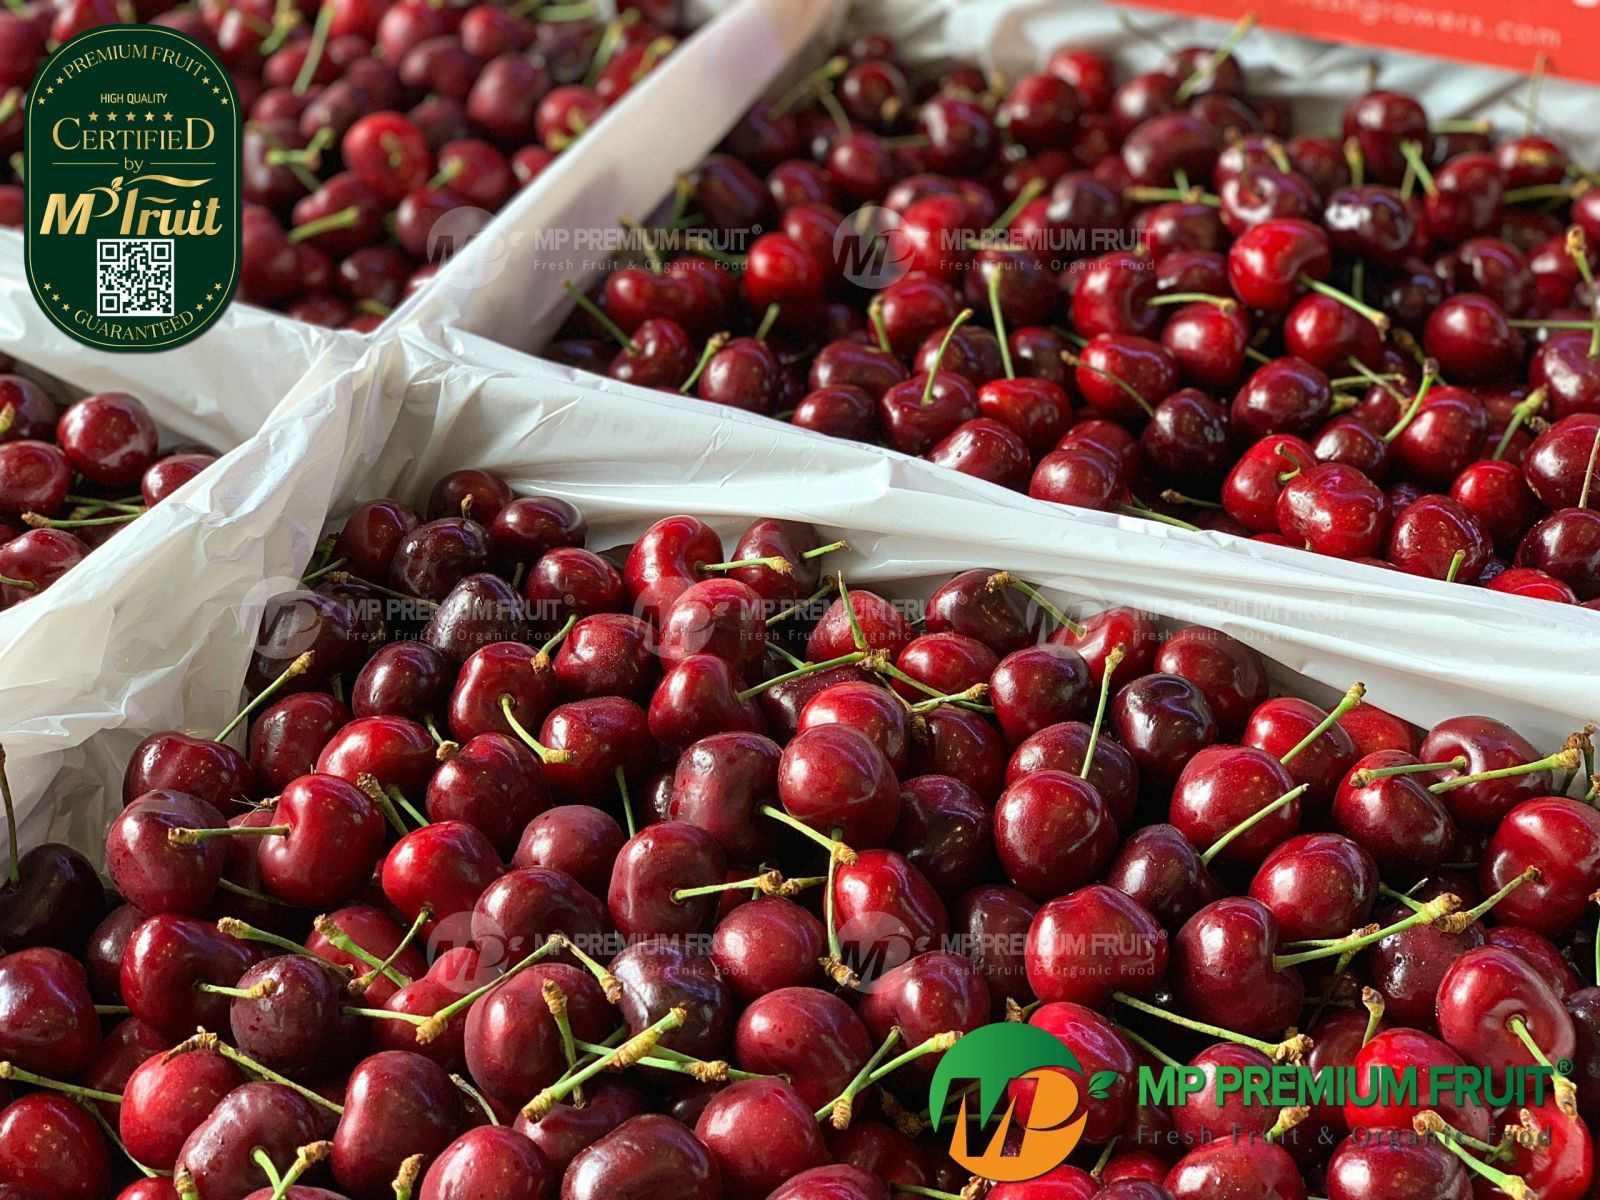 Cherry Đỏ Washington Mỹ Size 9 | Super Fresh Growers tại MP Fruit